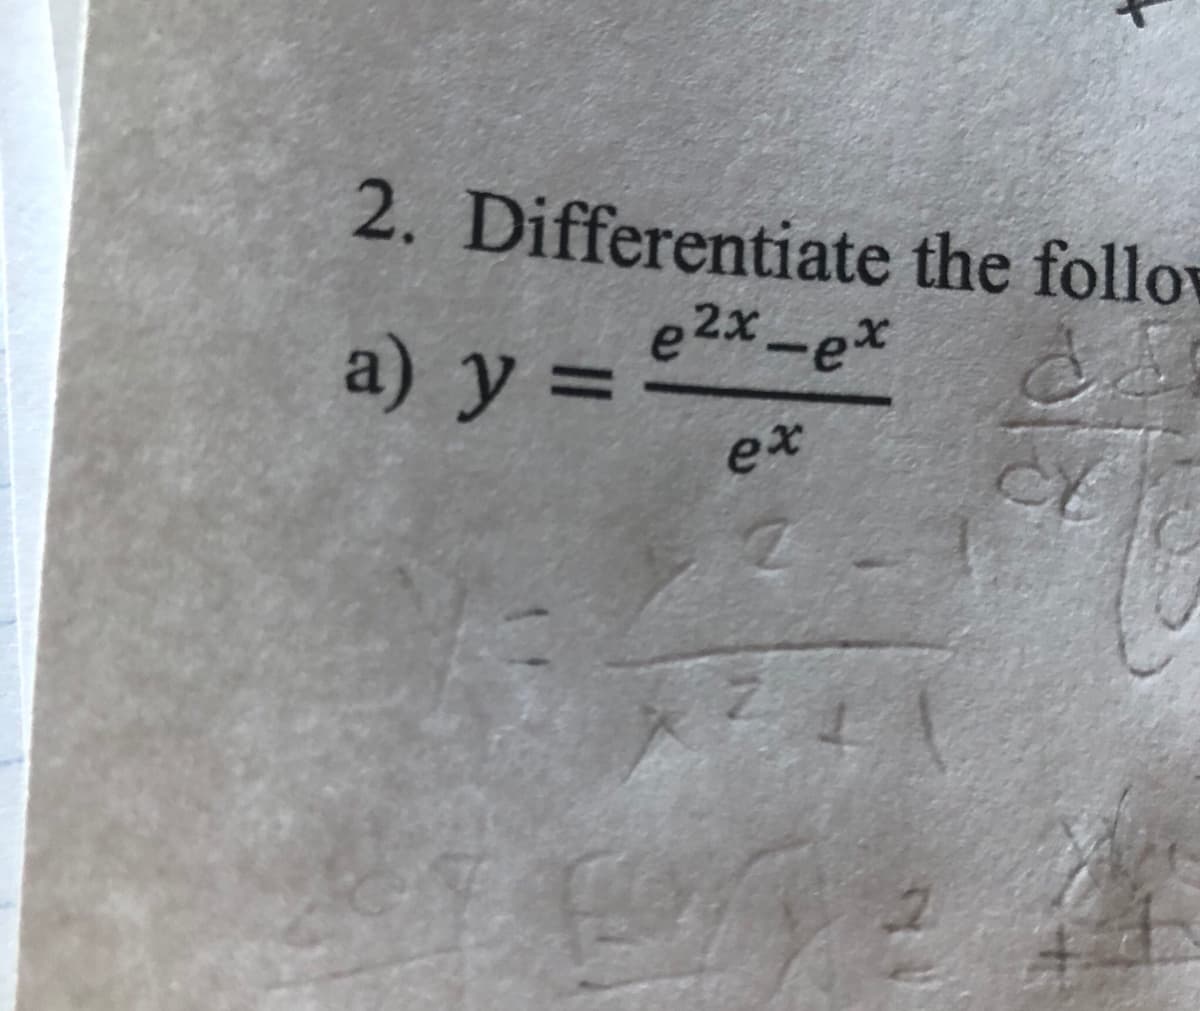 2. Differentiate the follow
a) y =
e 2x -ex
%3D
ex
